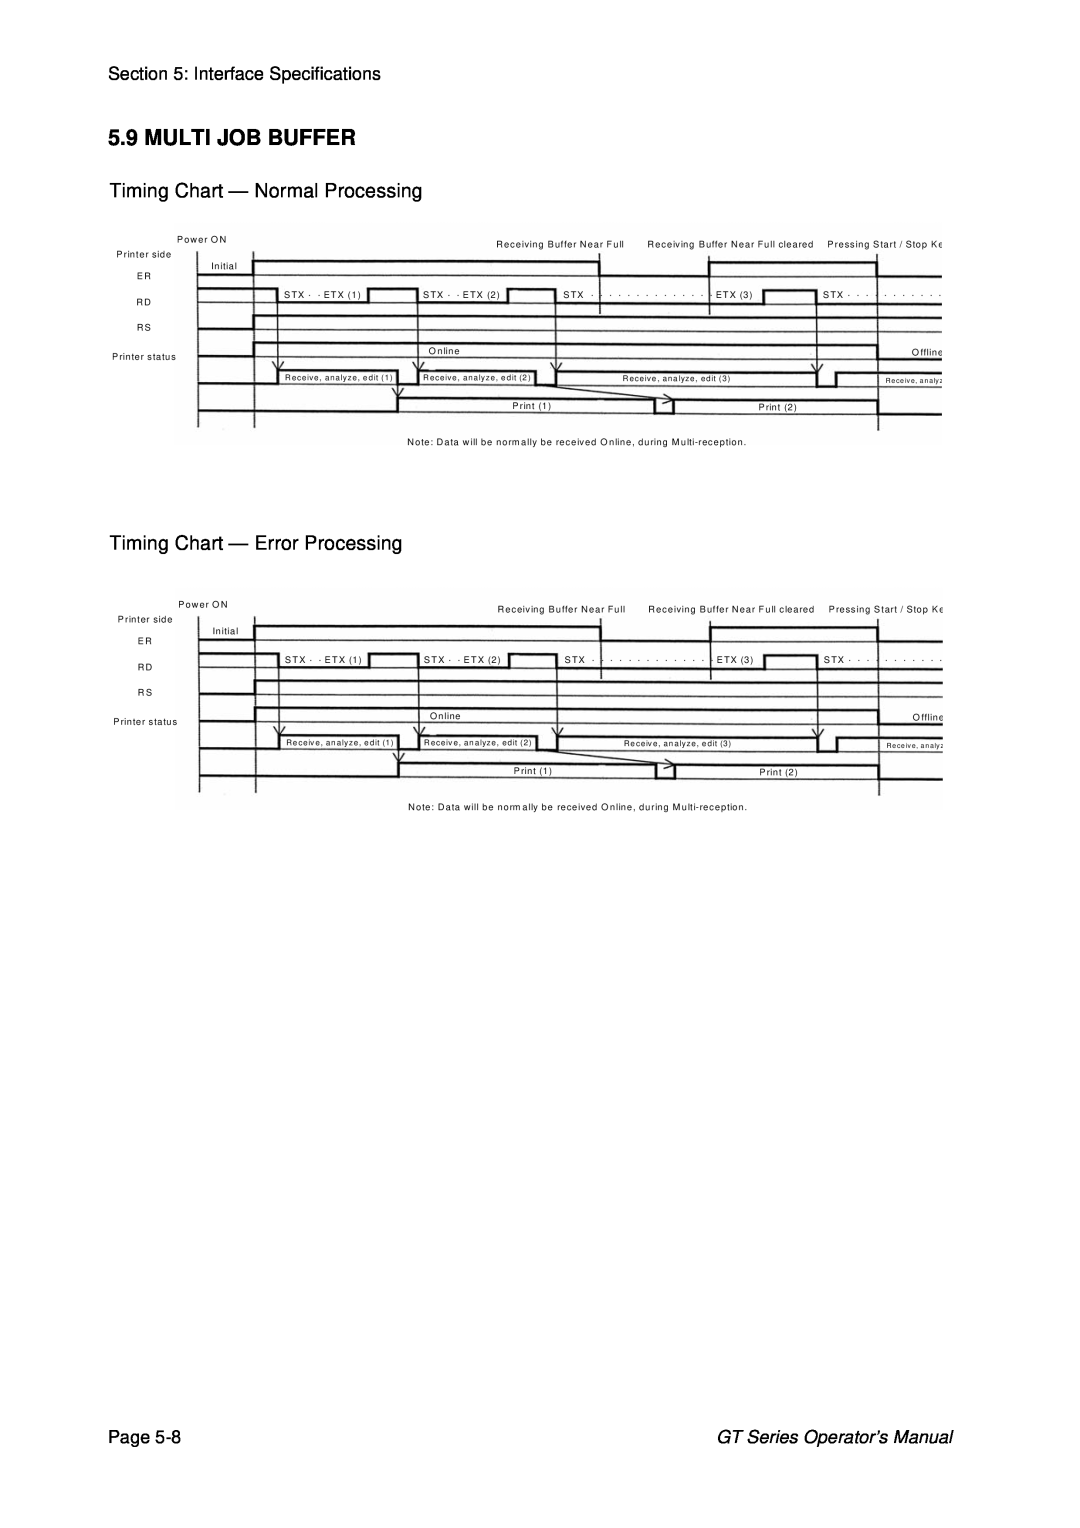 SATO GT424 manual Multi Job Buffer, Timing Chart - Normal Processing, Timing Chart - Error Processing 